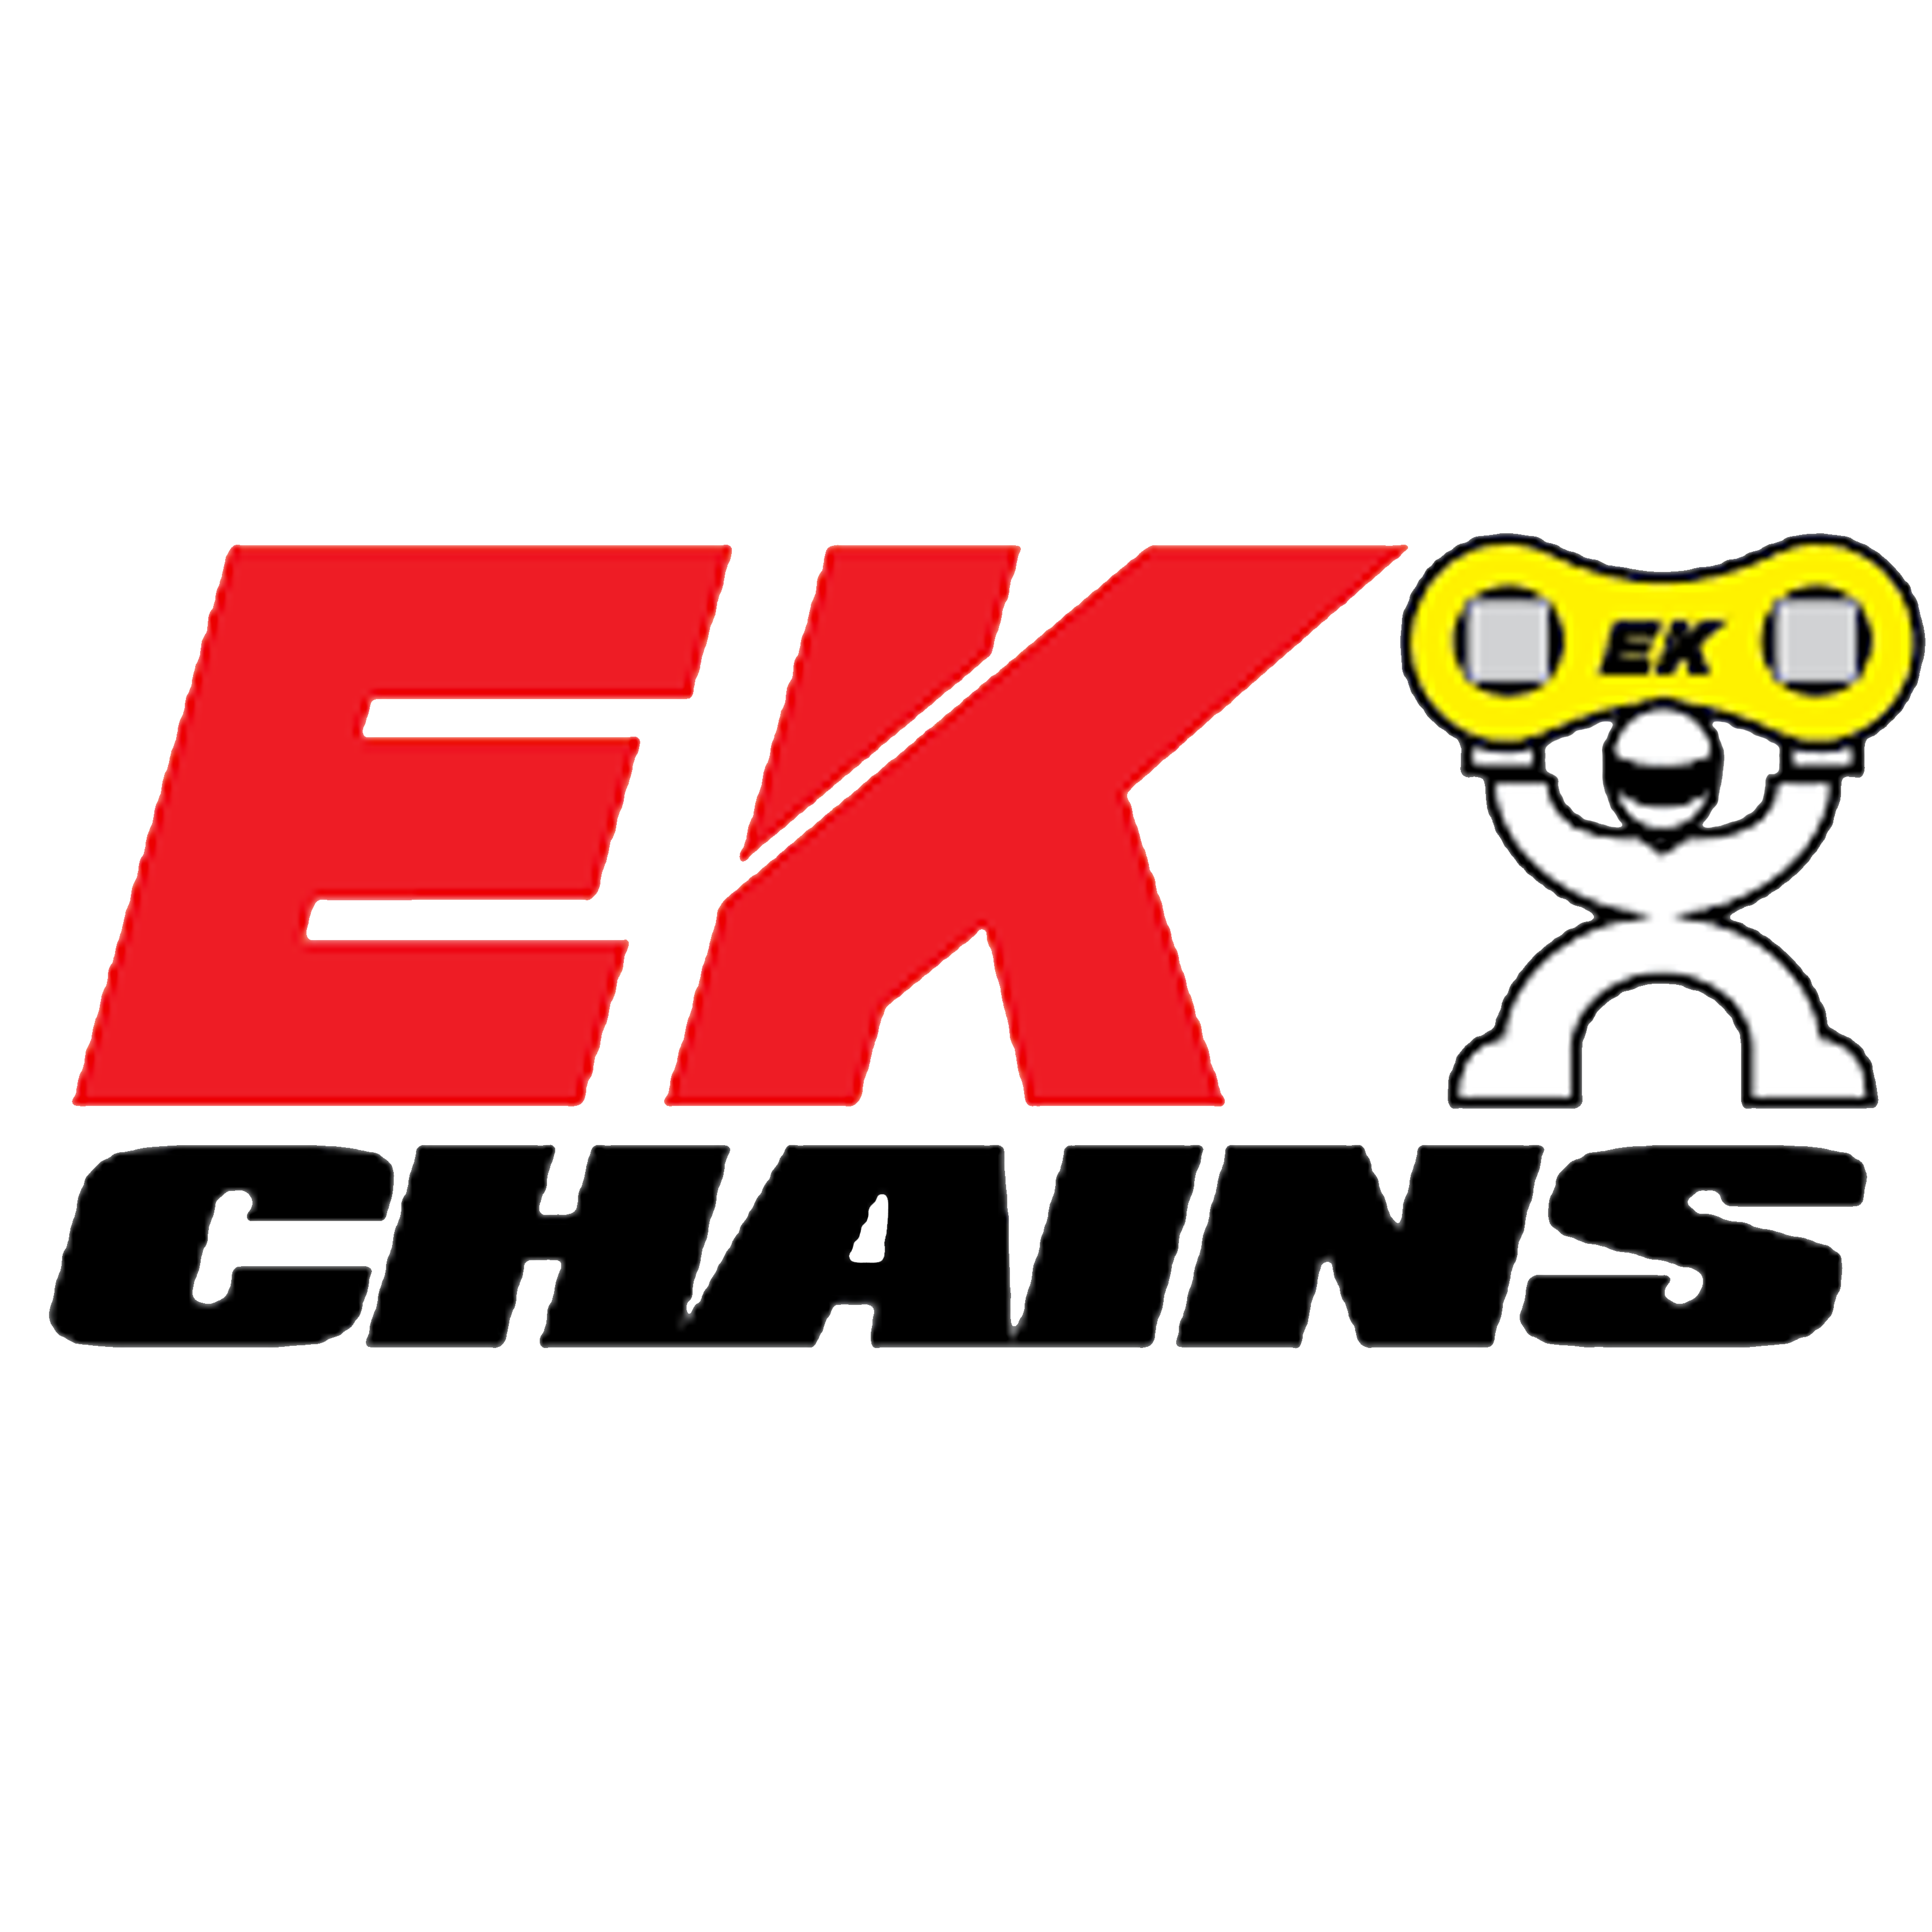 EK chain